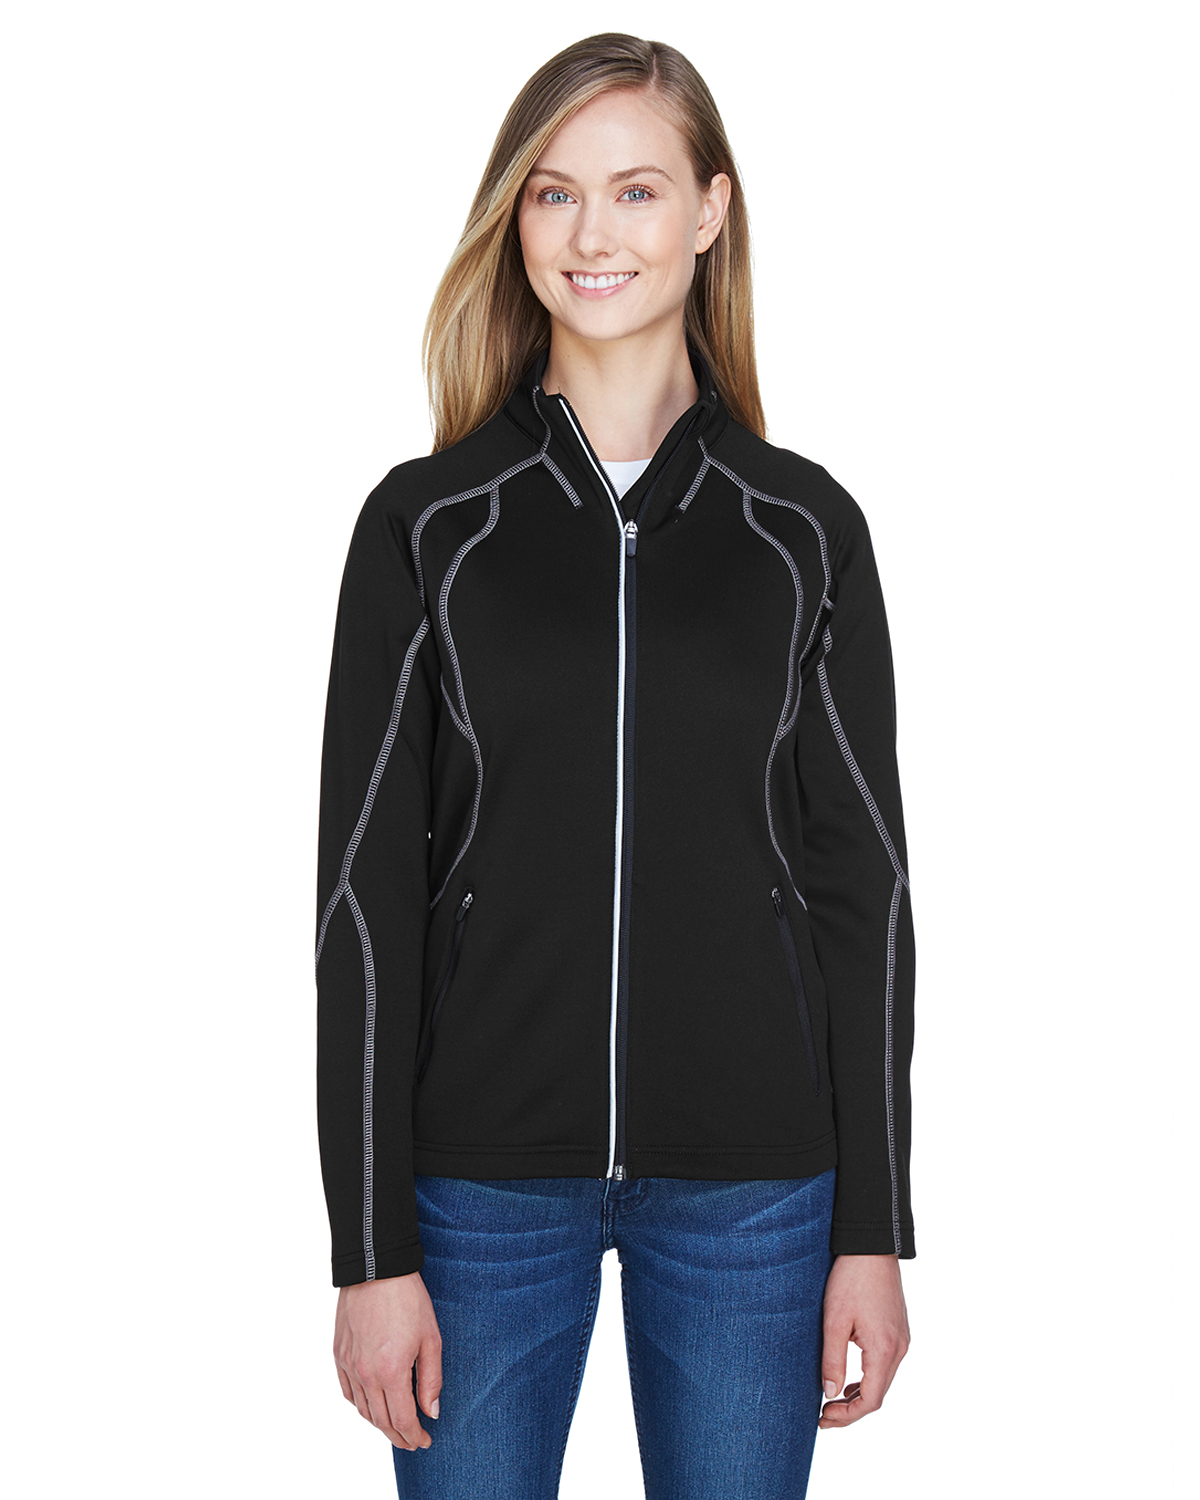 Ladies' Gravity Performance Fleece Jacket - BLACK - S - image 1 of 3